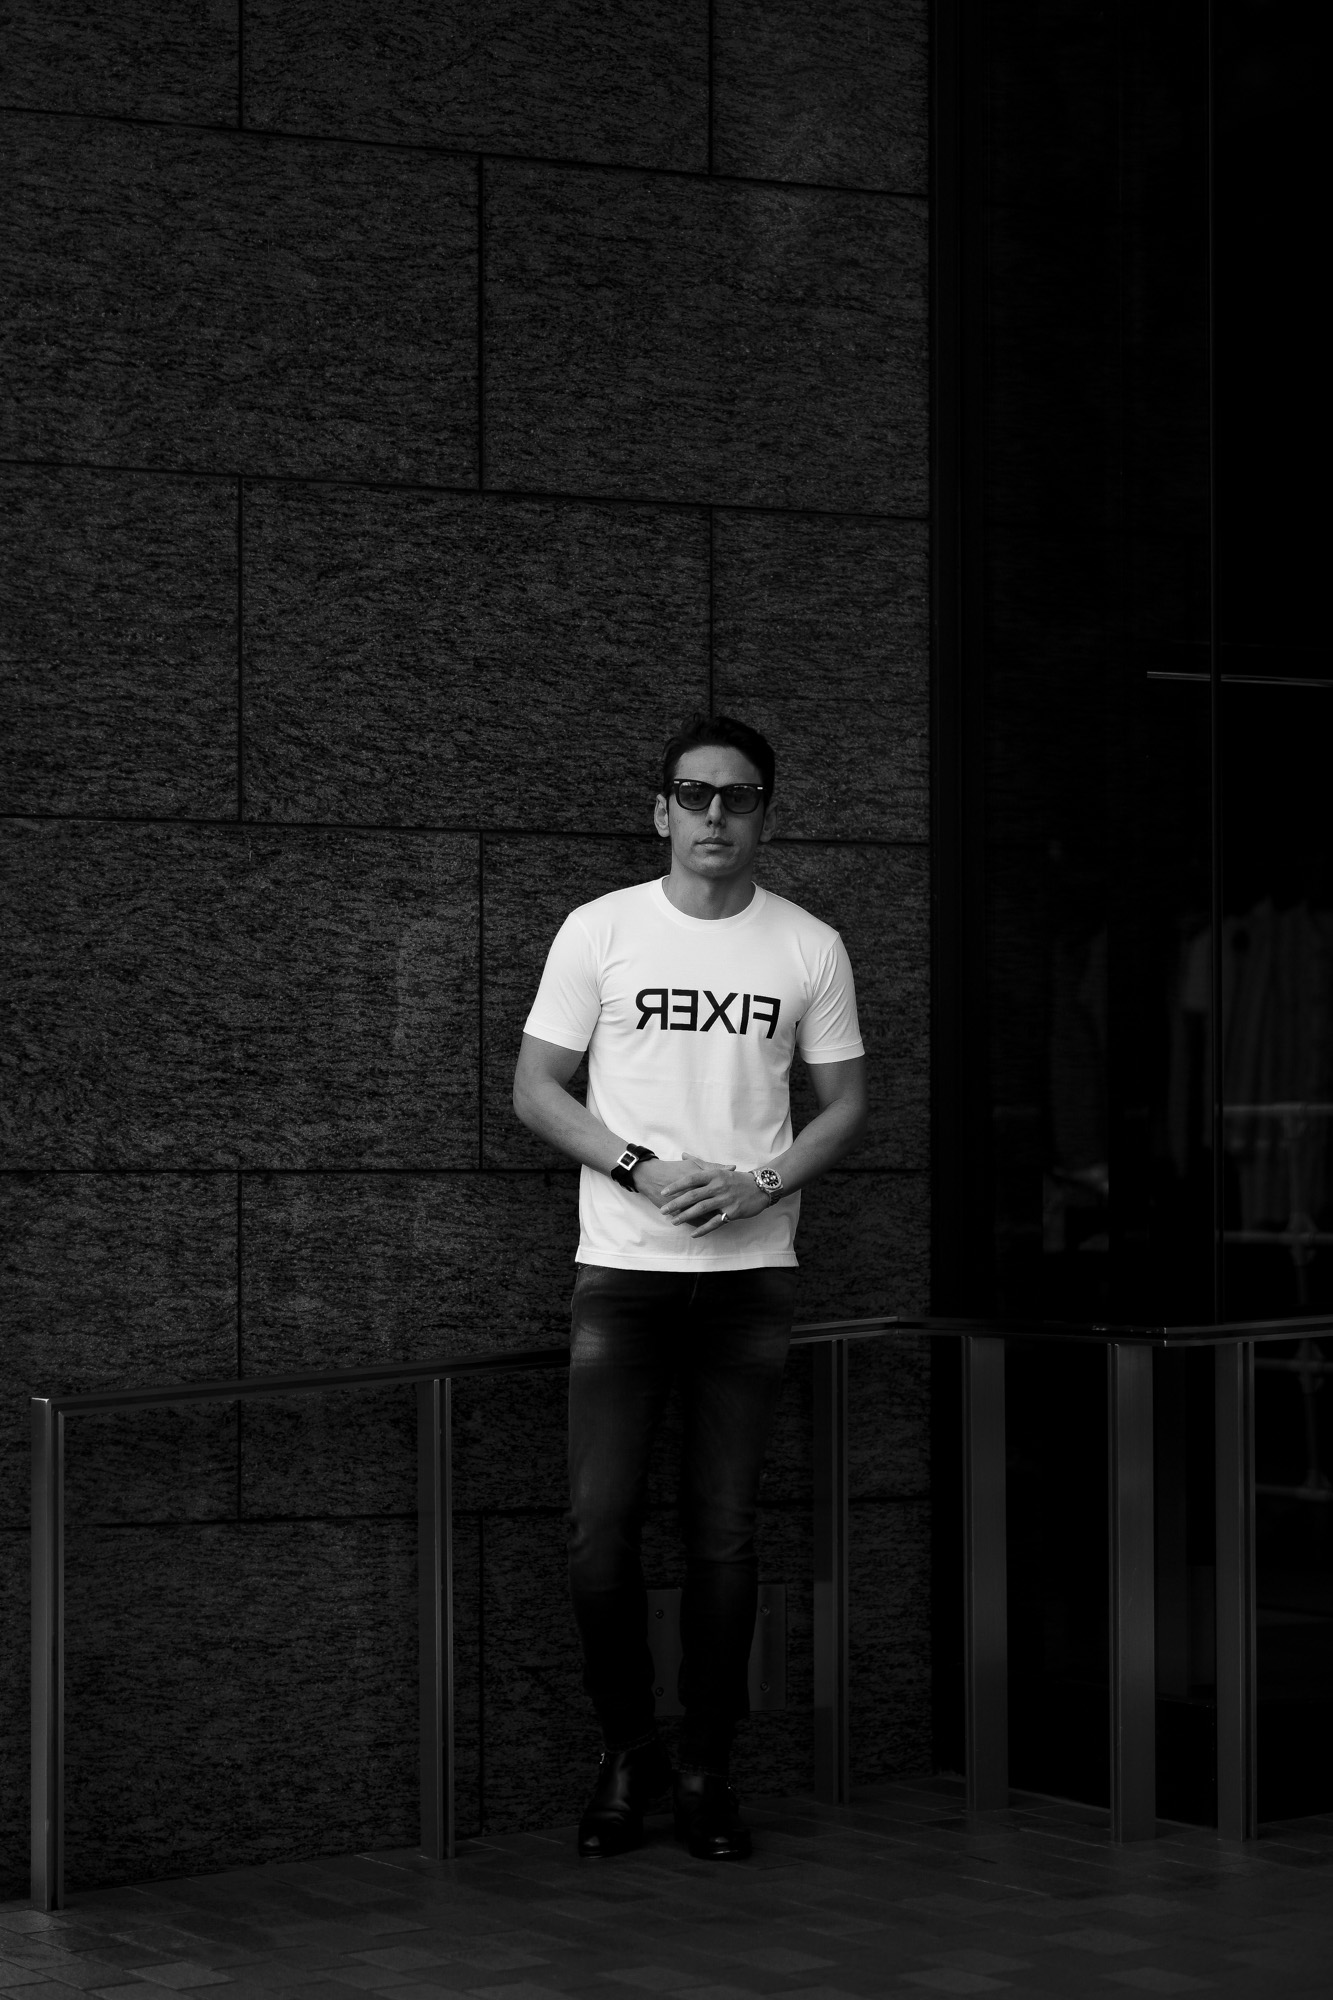 FIXER (フィクサー) FTS-03 Reverse Print Crew Neck T-shirt リバースプリント Tシャツ WHITE (ホワイト) 愛知 名古屋 Alto e Diritto altoediritto アルトエデリット Tシャツ"